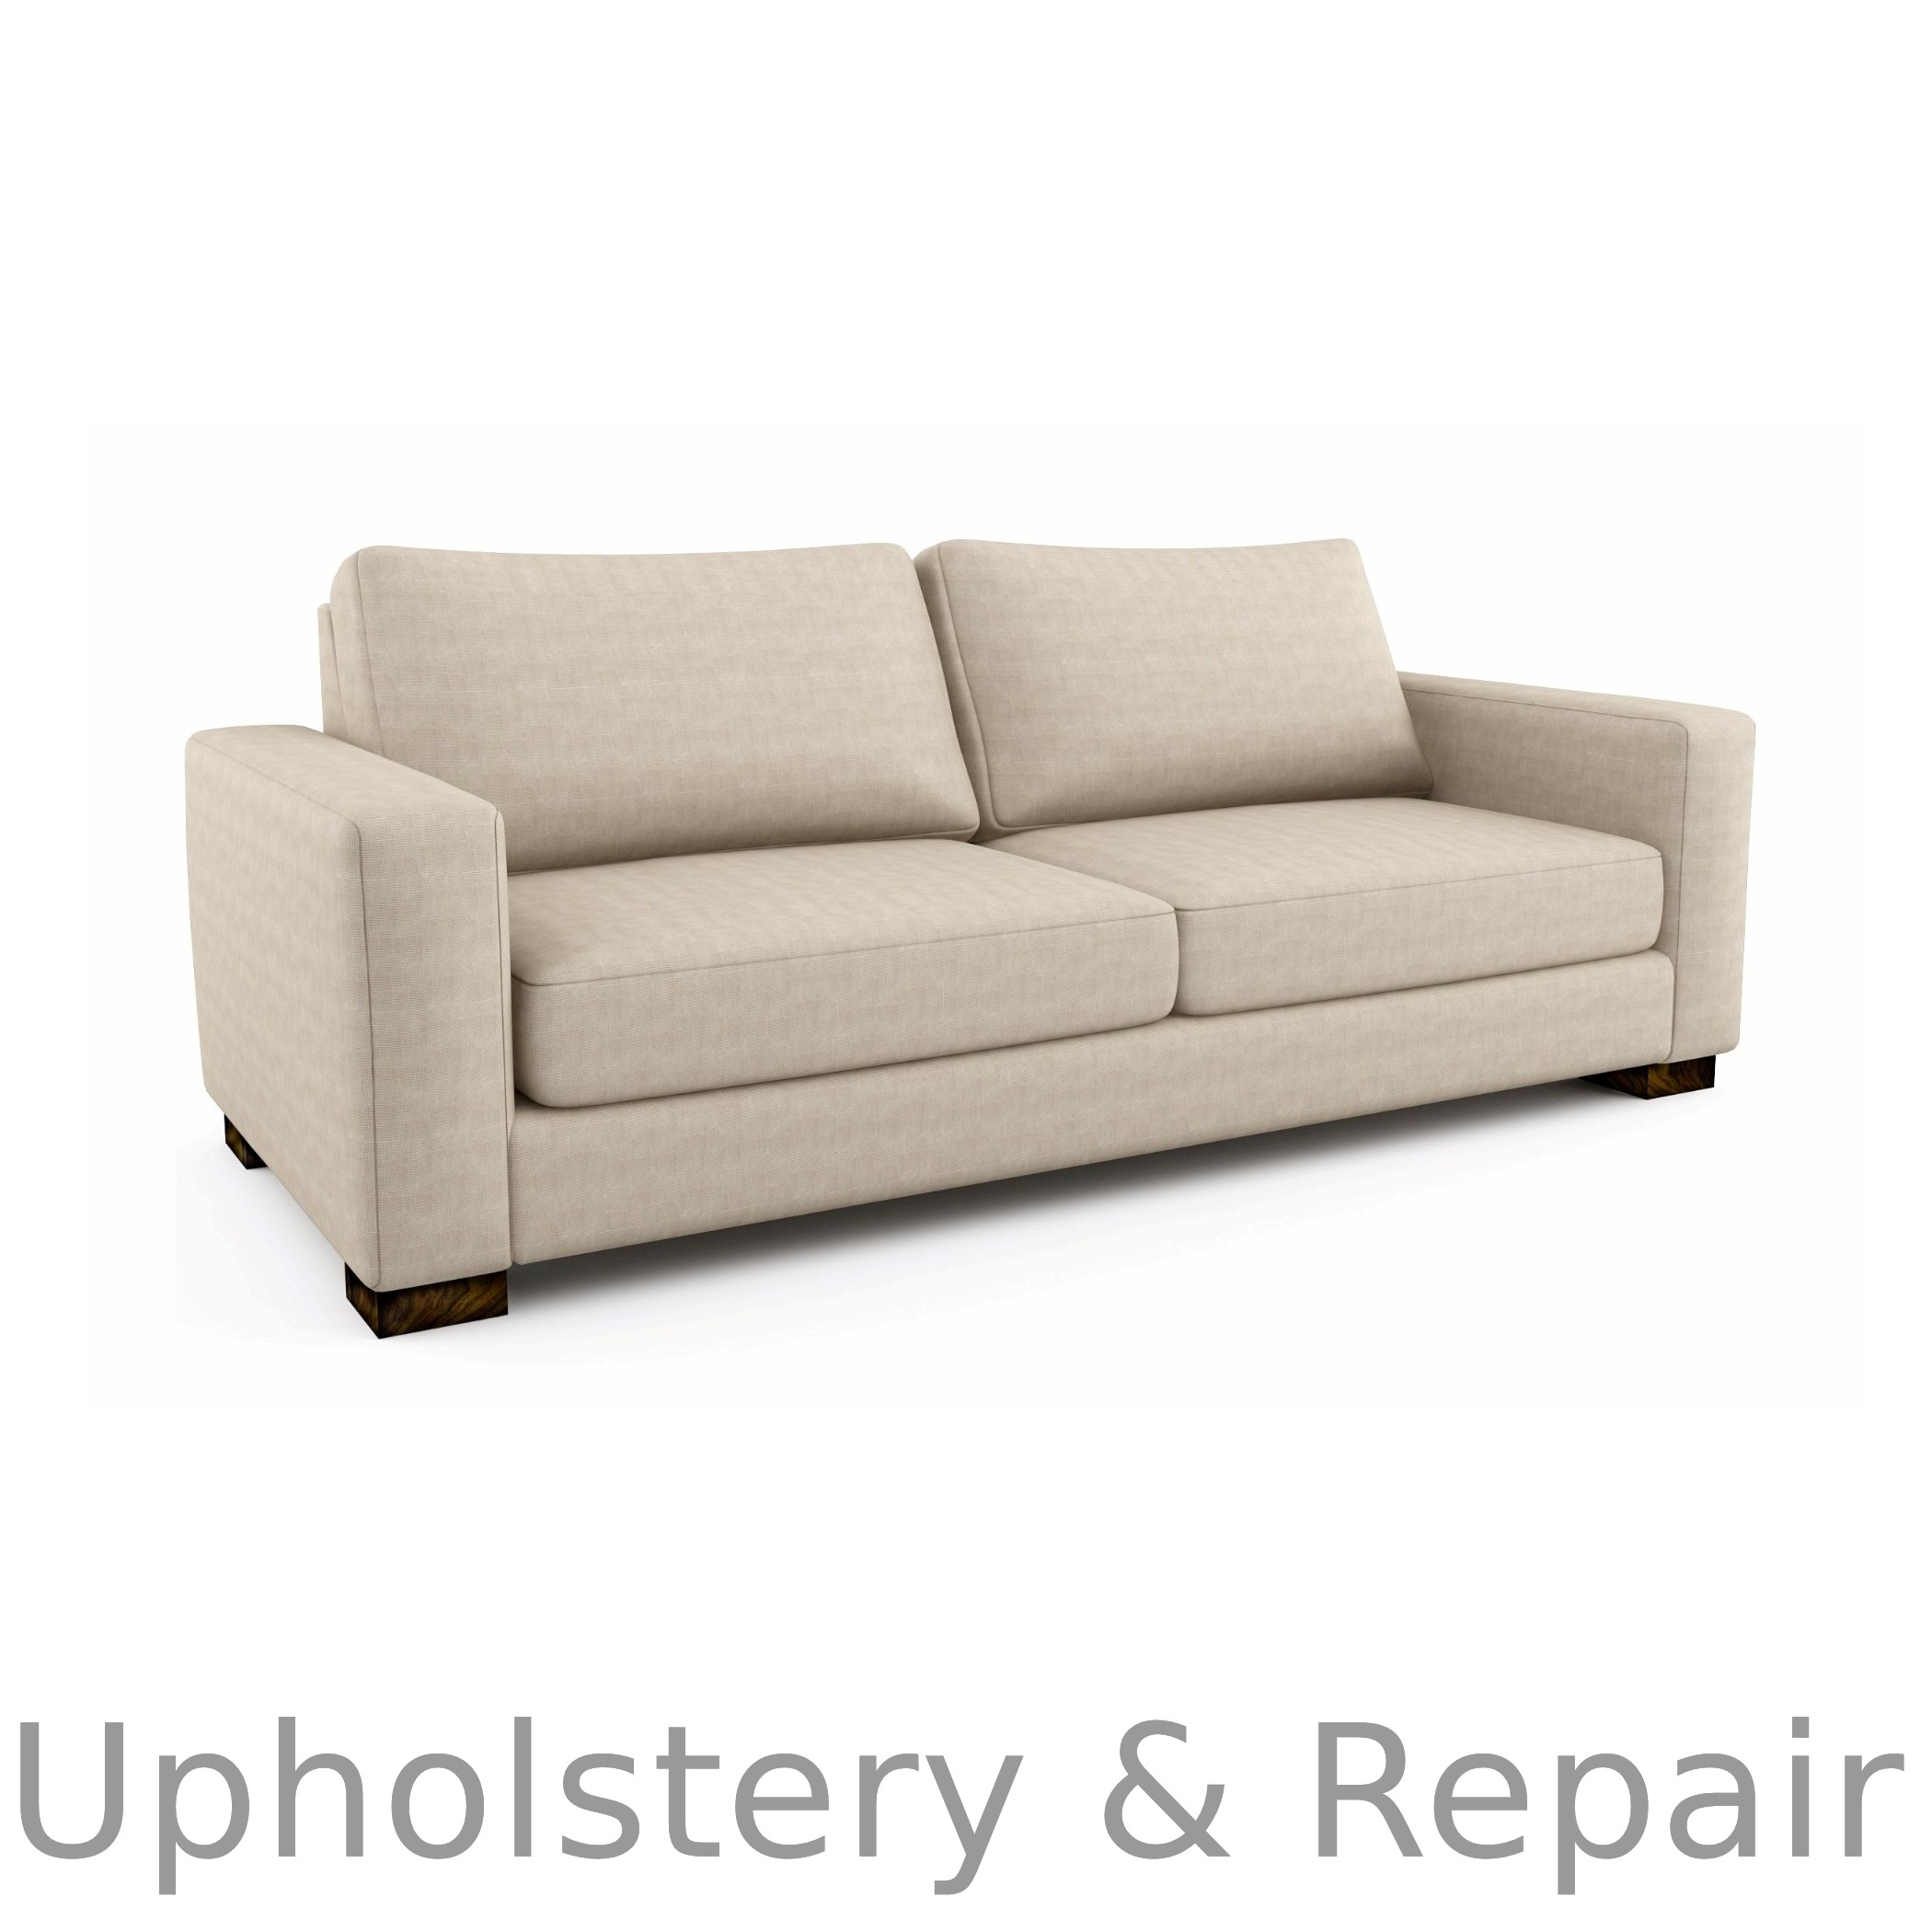 upholstery repair.jpg